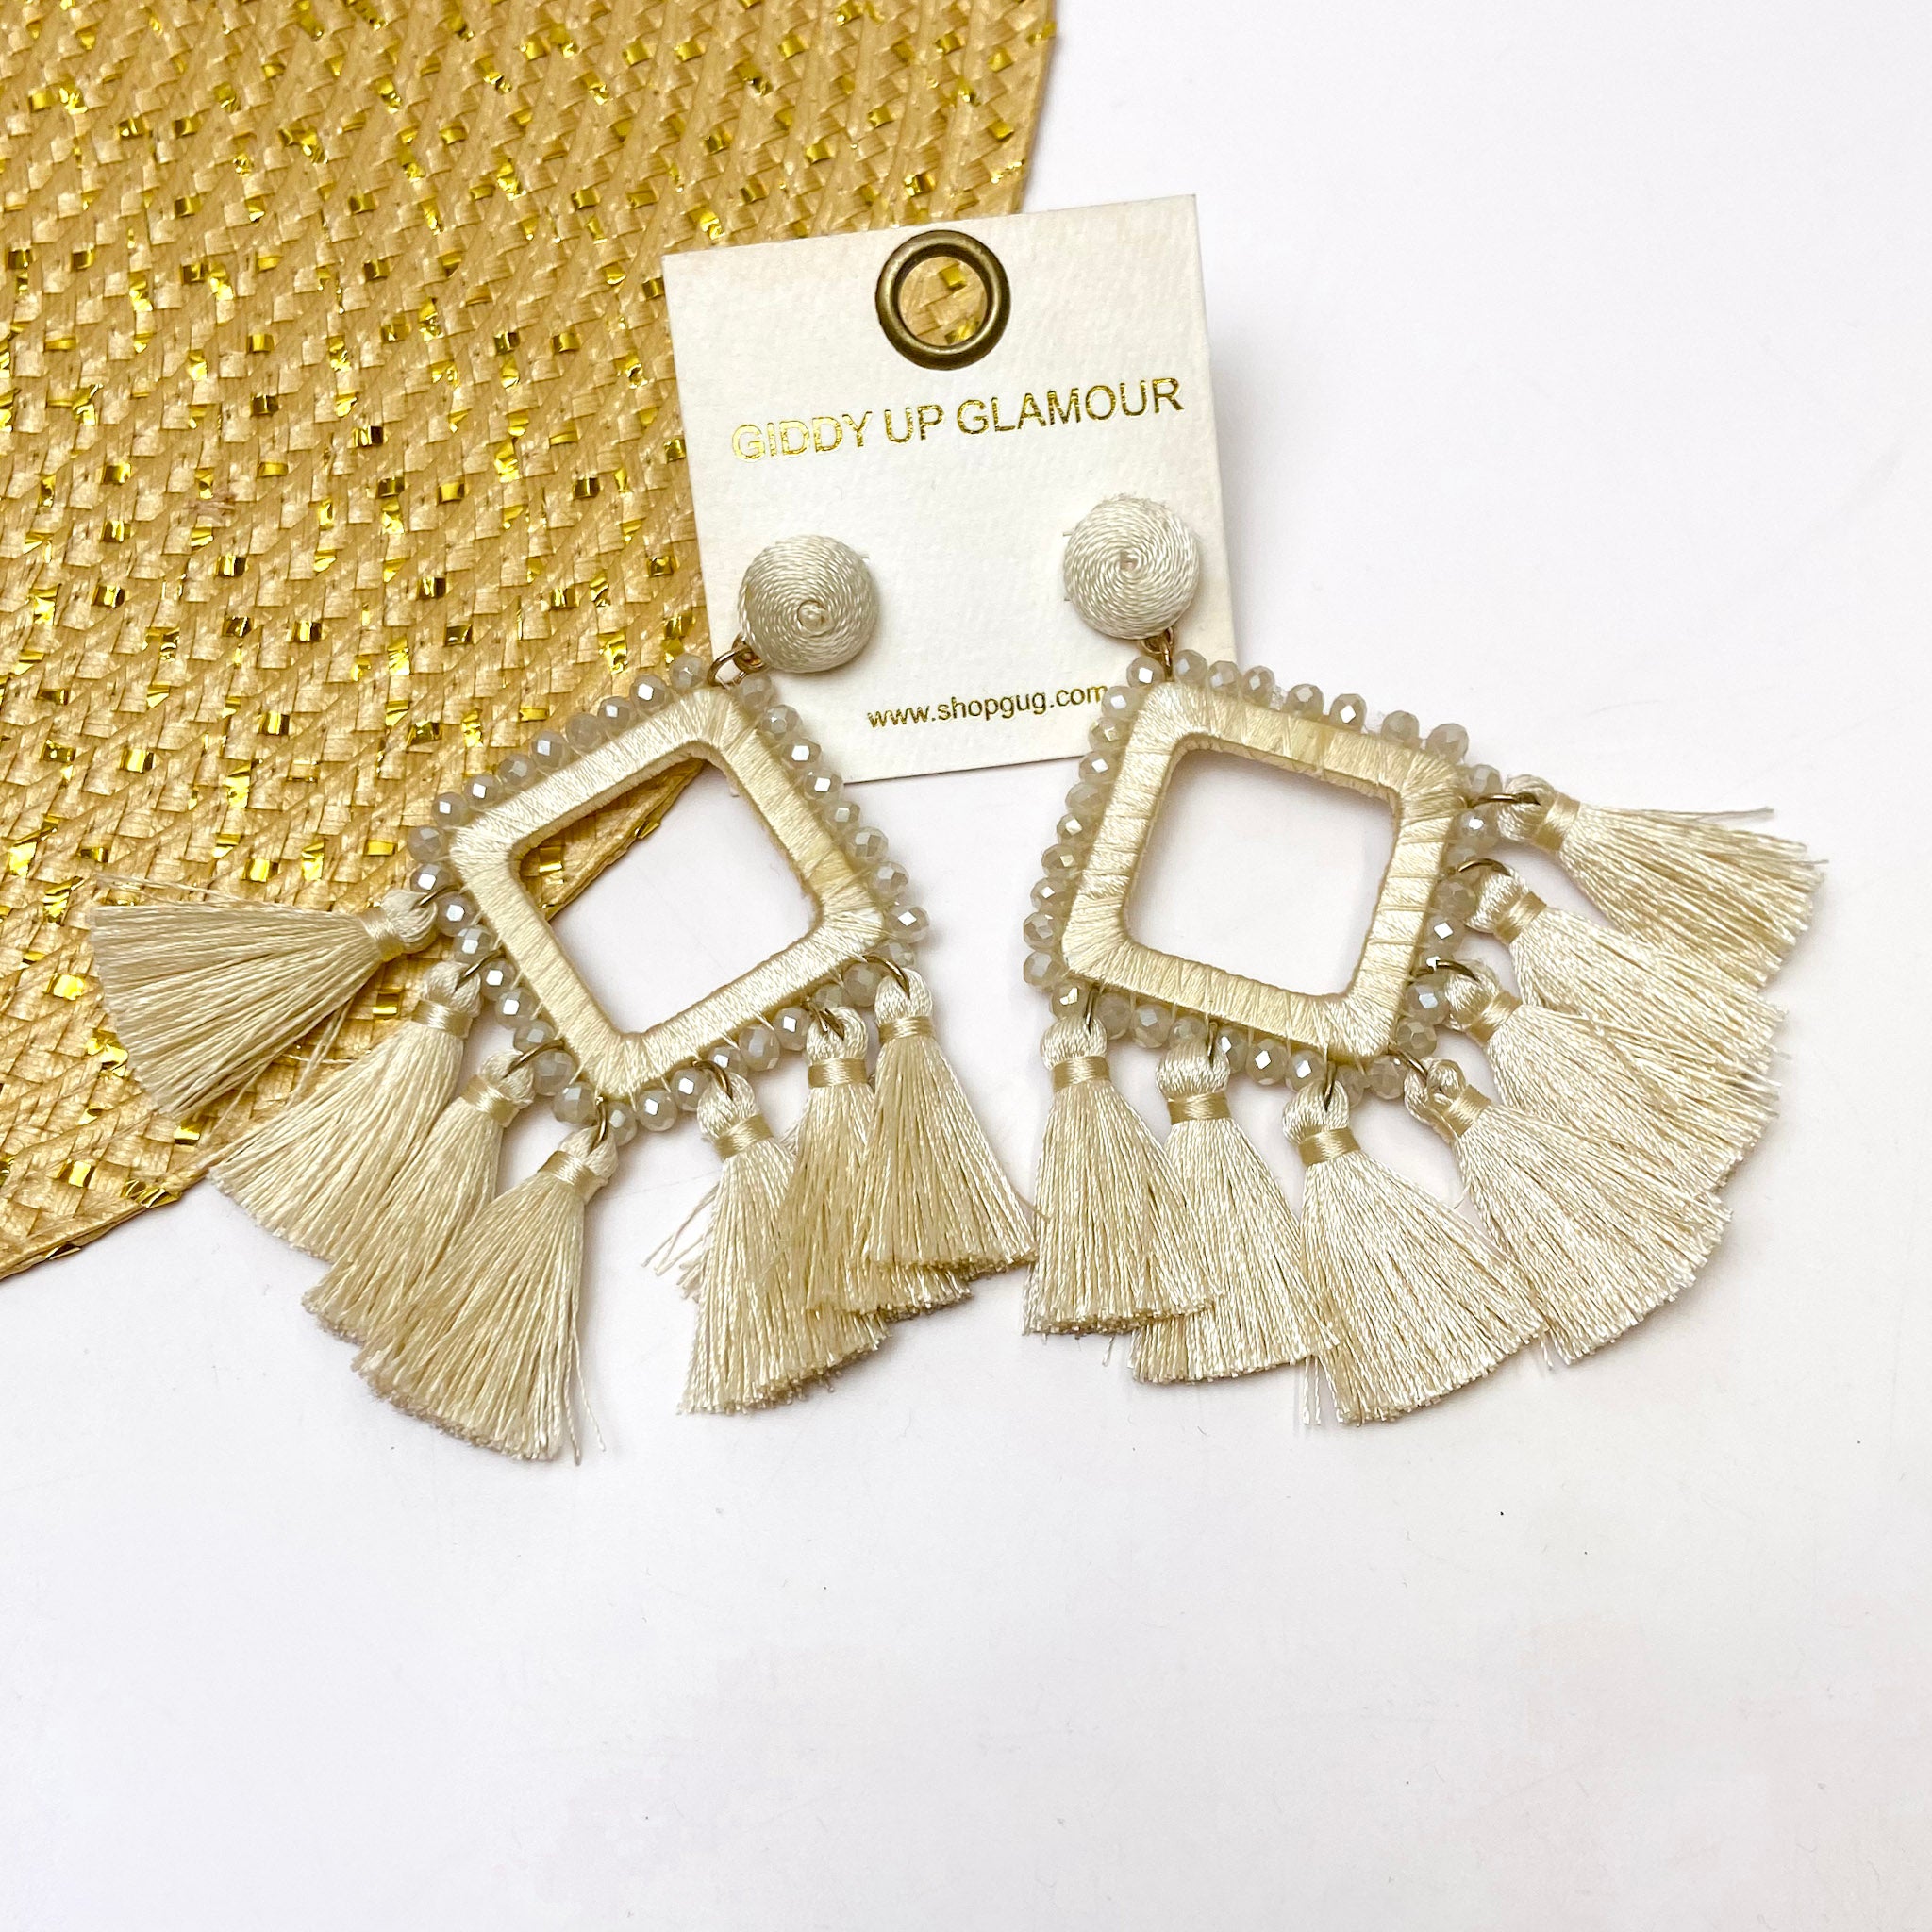 Beaded Diamond Shaped Earrings With Tassel Fringe in Champagne Gold